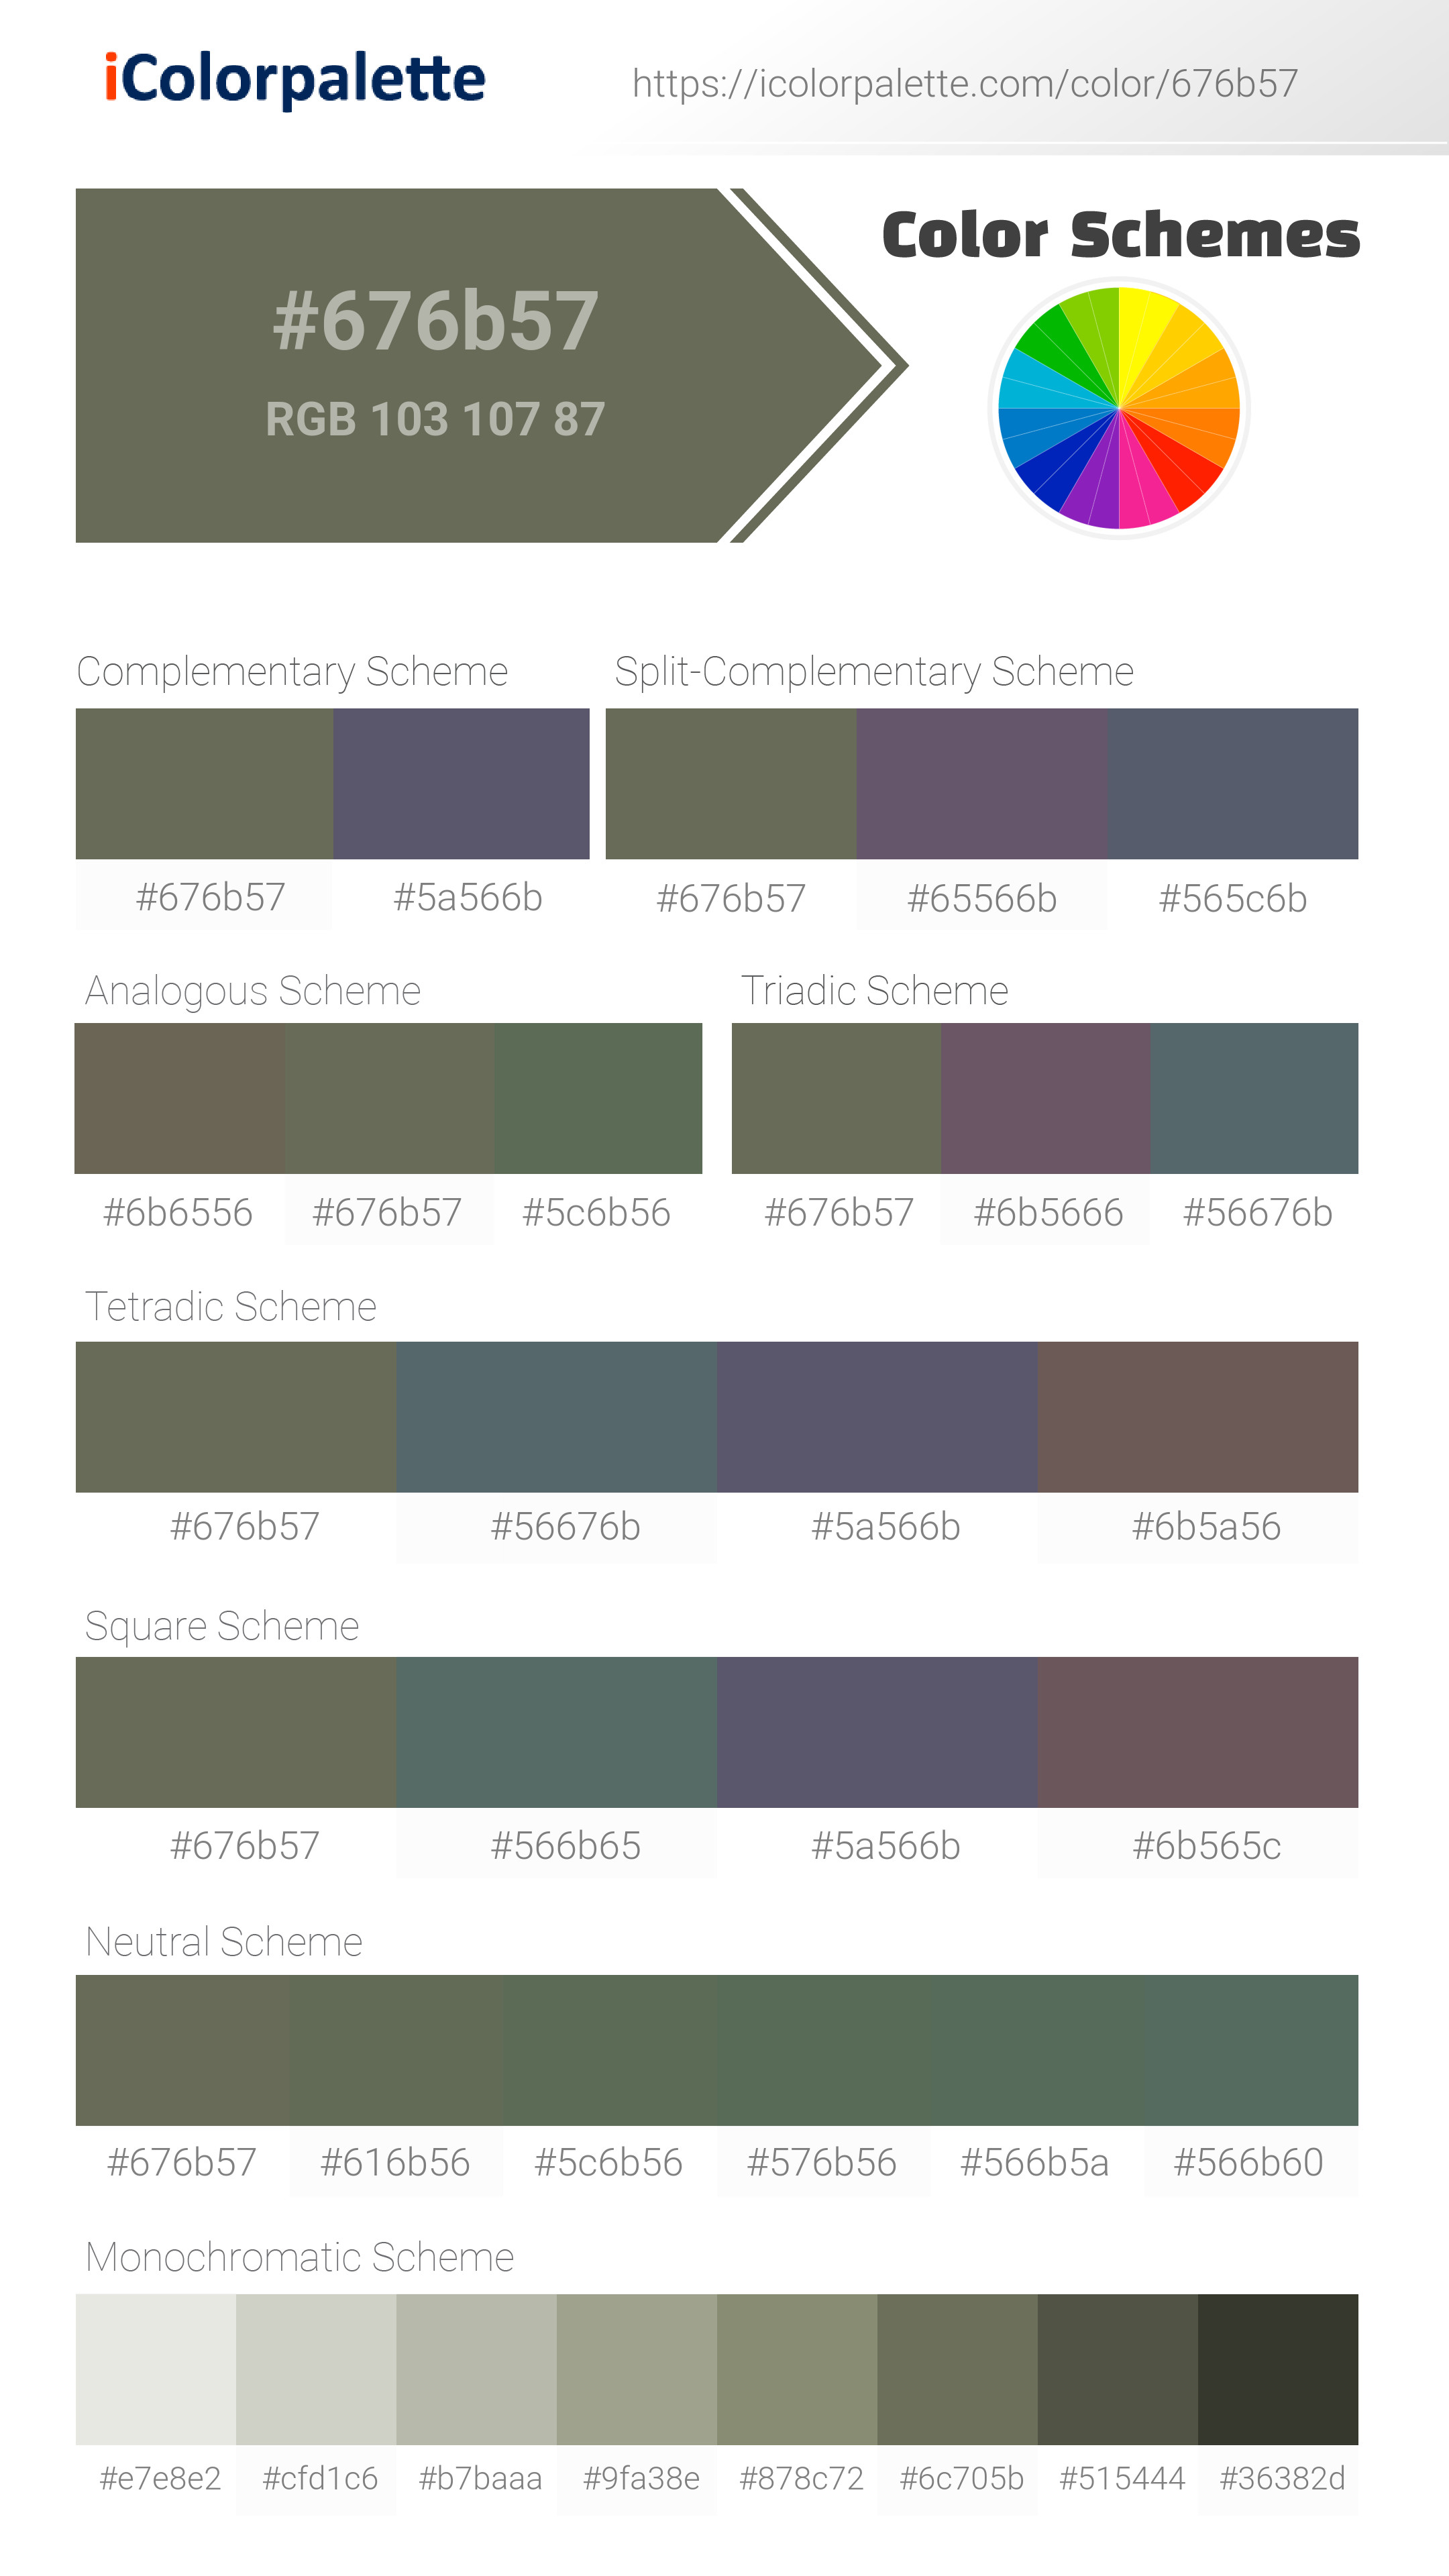 https://www.icolorpalette.com/download/schemes/676b57_colorschemes_icolorpalette.jpg